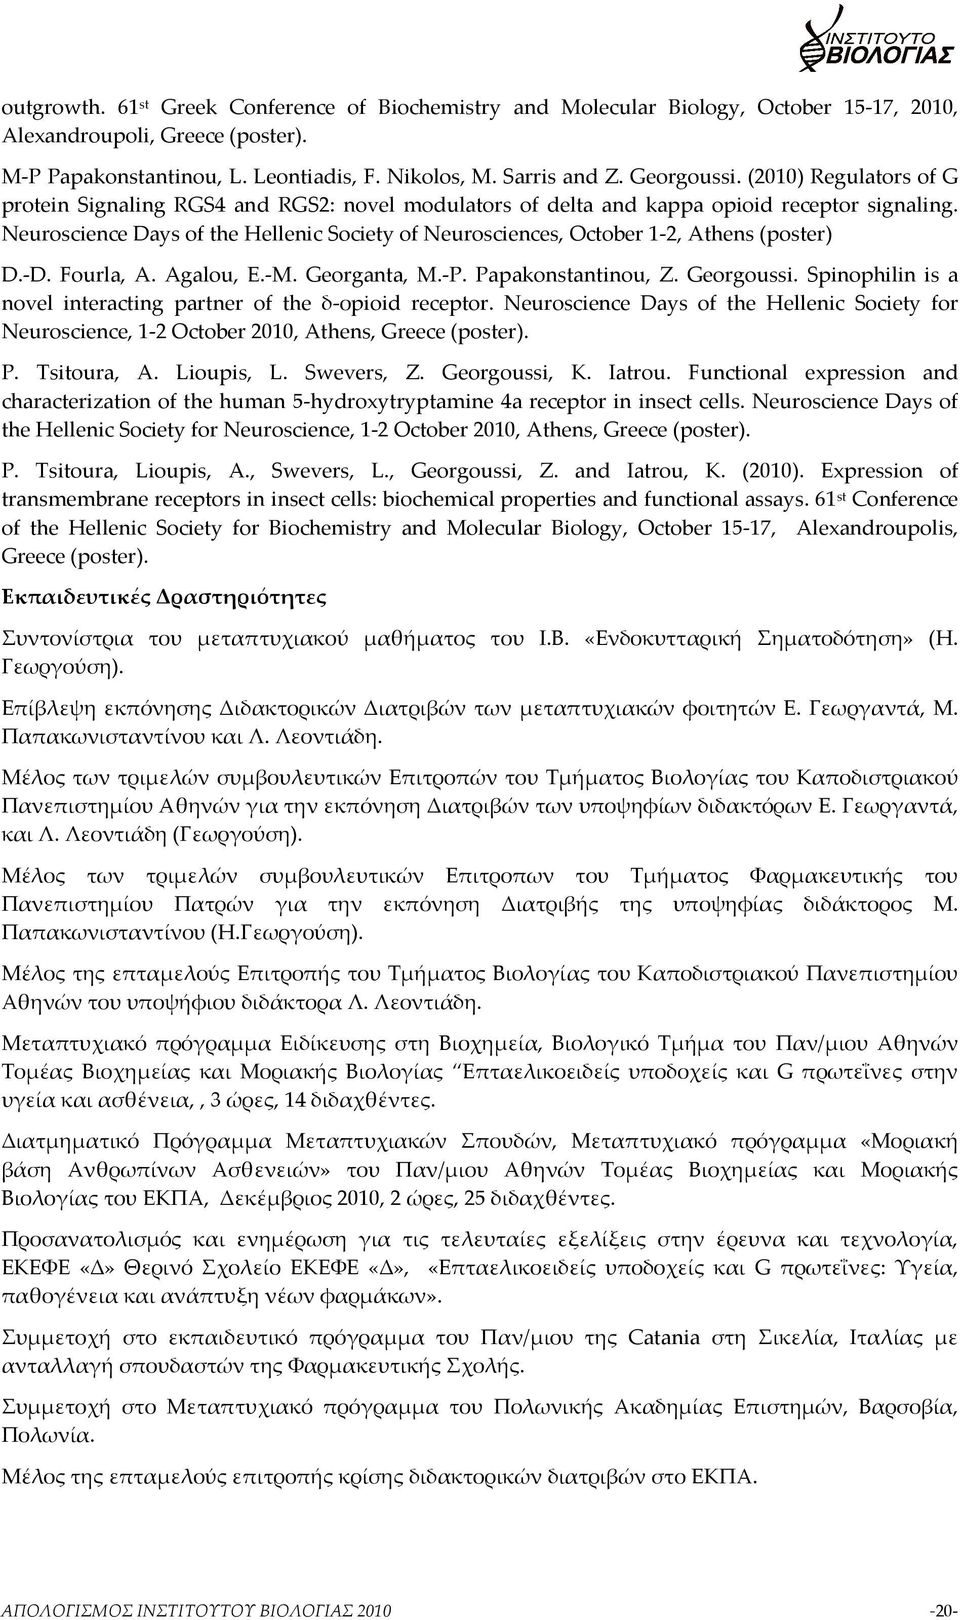 Neuroscience Days of the Hellenic Society of Neurosciences, October 1-2, Athens (poster) D.-D. Fourla, A. Agalou, E.-M. Georganta, M.-P. Papakonstantinou, Z. Georgoussi.